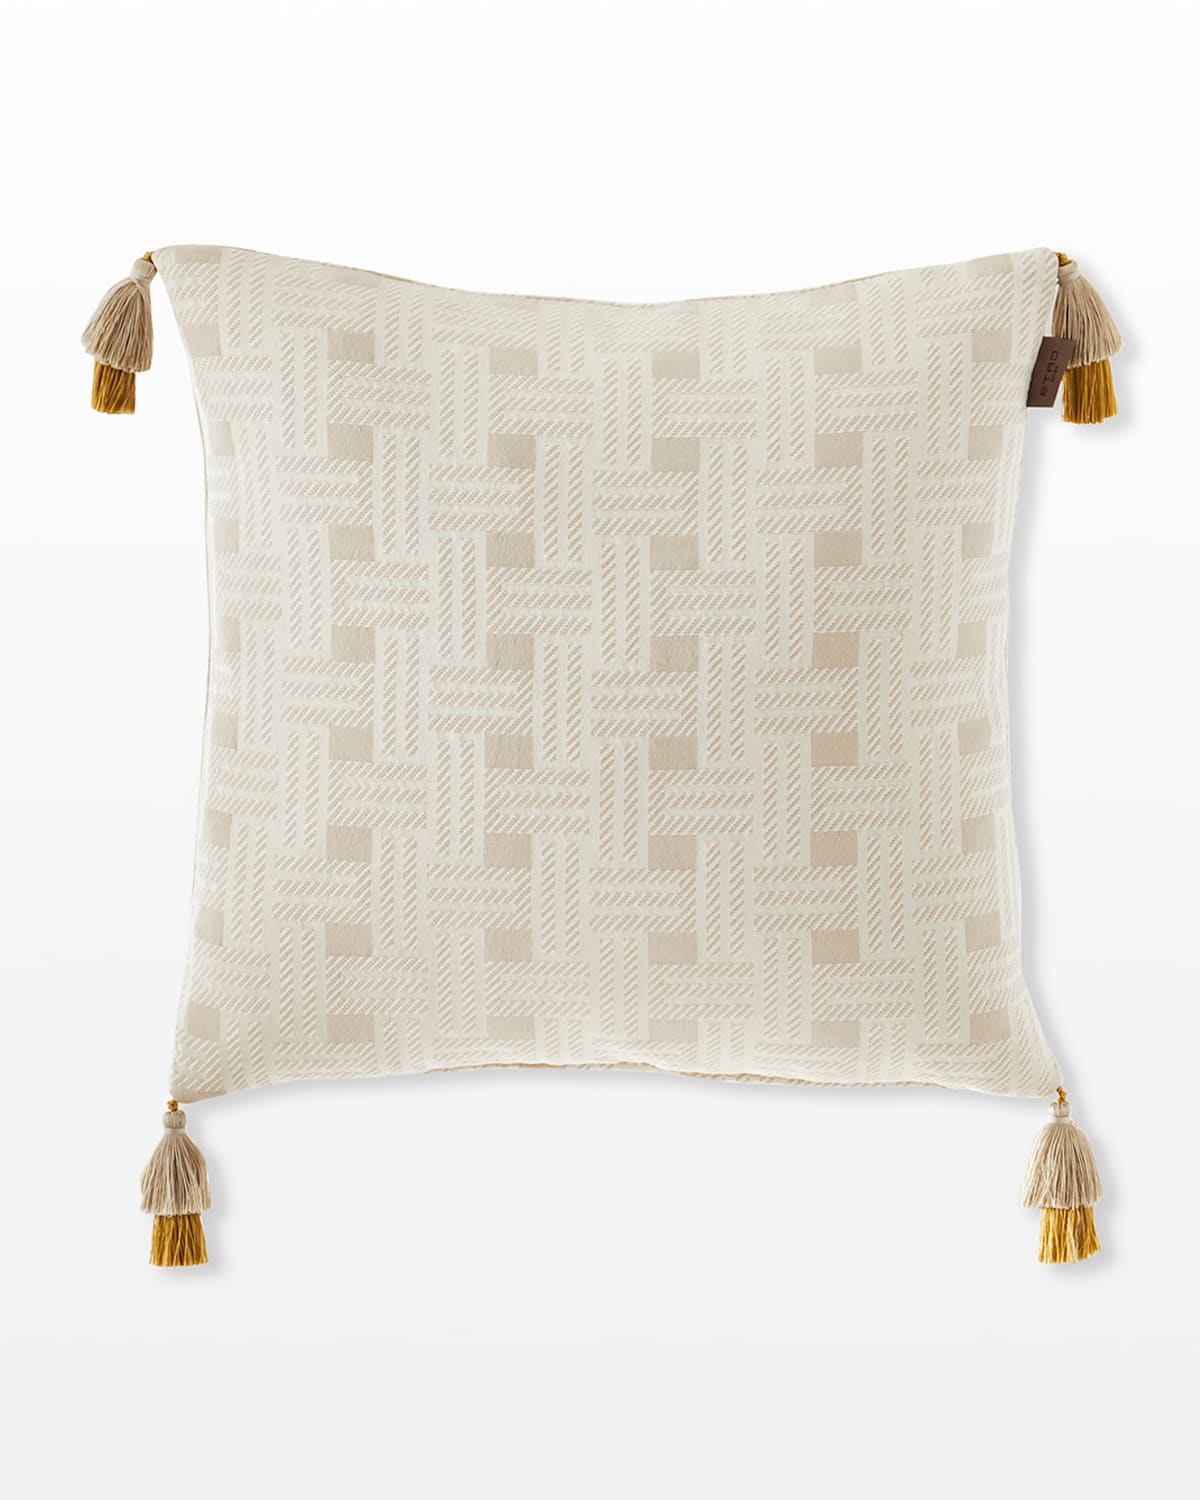 Etro Zenith Pillow With Tassels, 18"sq.